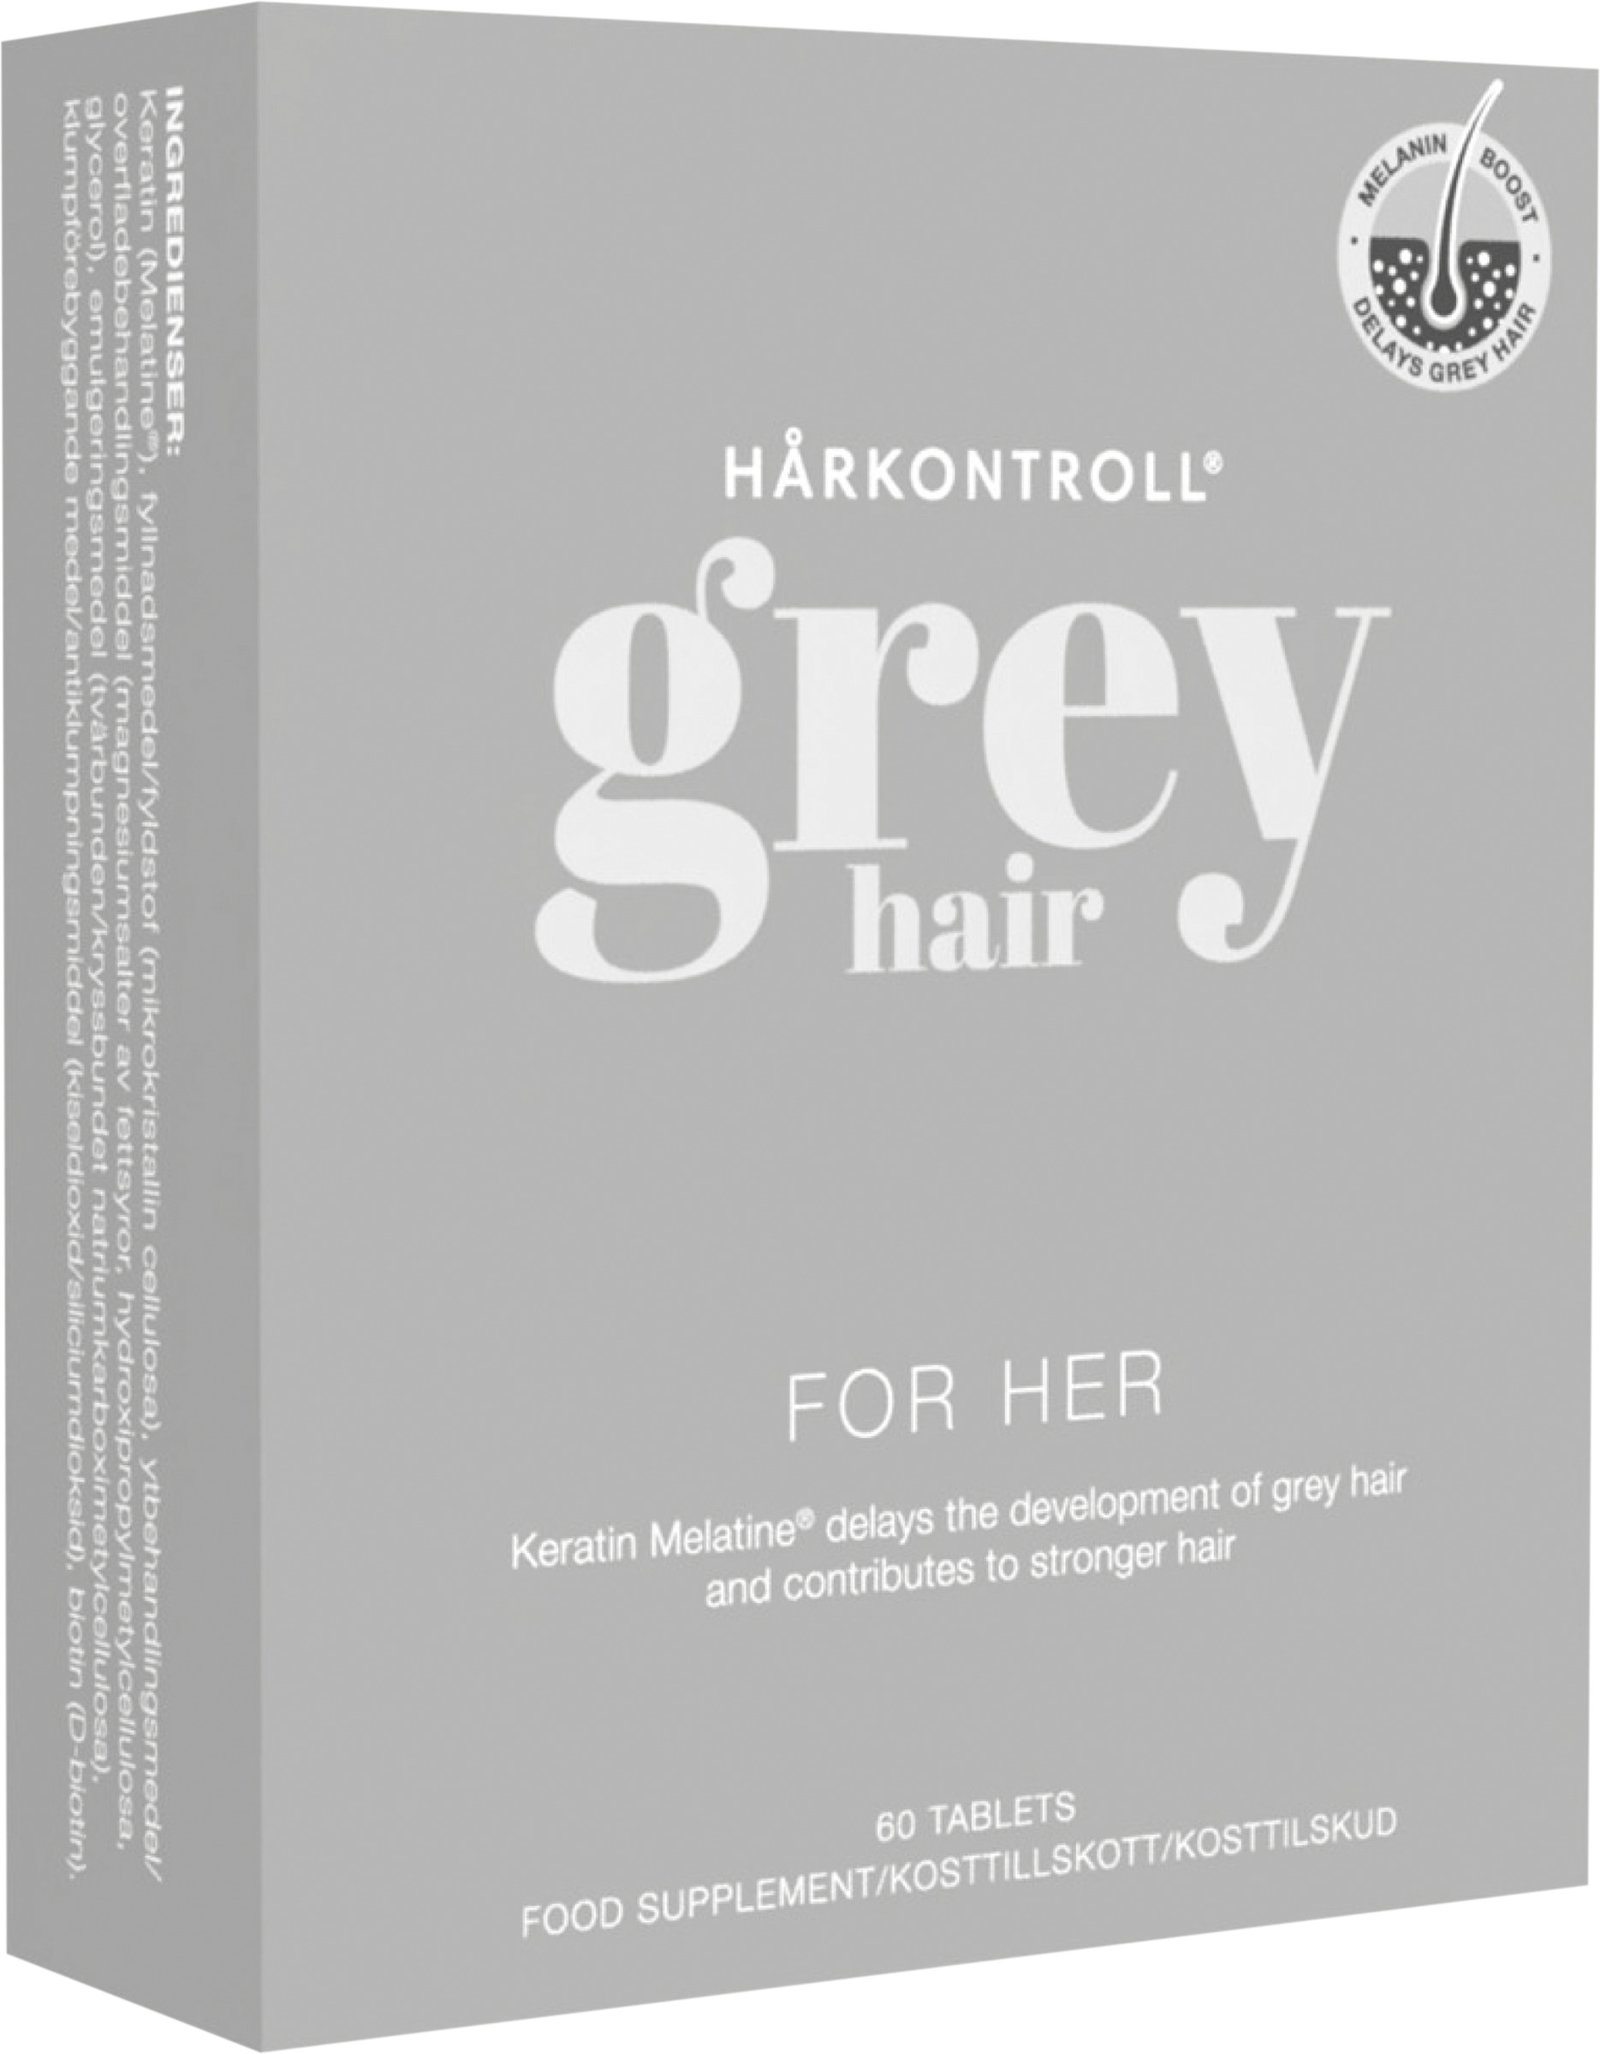 Hårkontroll Grey Hair For Her 60 tabletter